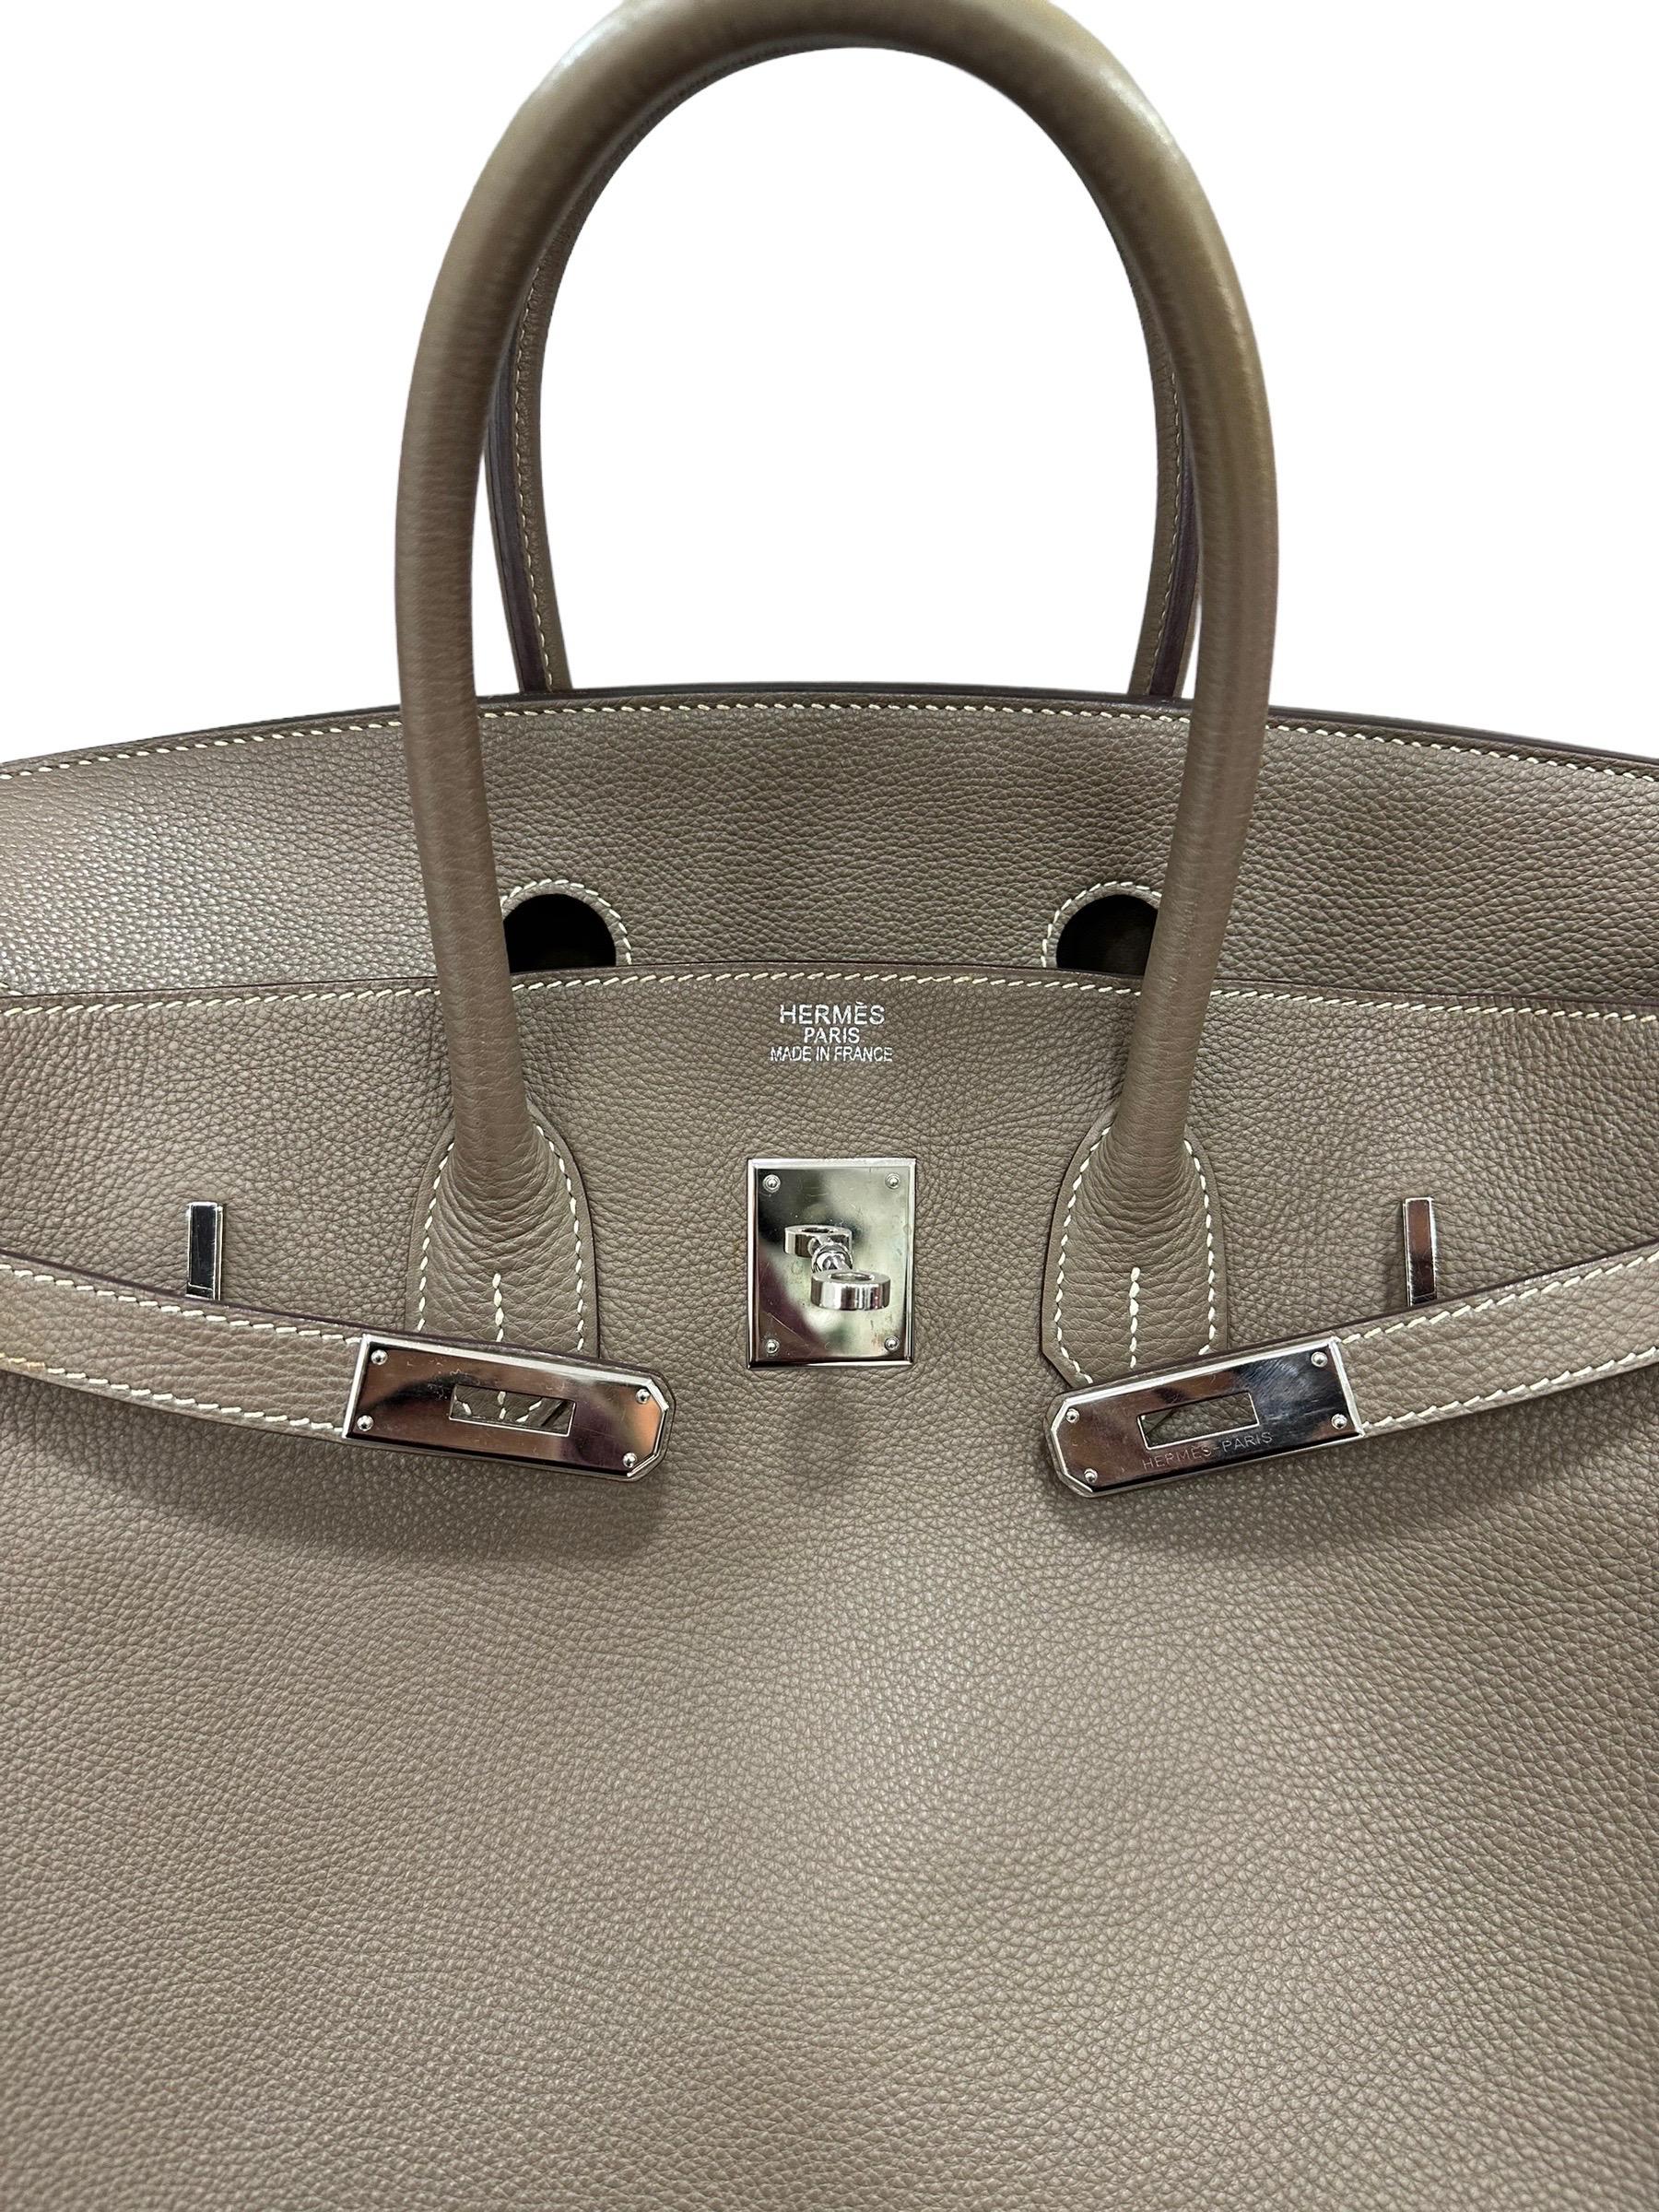 2008 Hermès Birkin 35 Togo Leather Toundra Top Handle Bag en vente 11